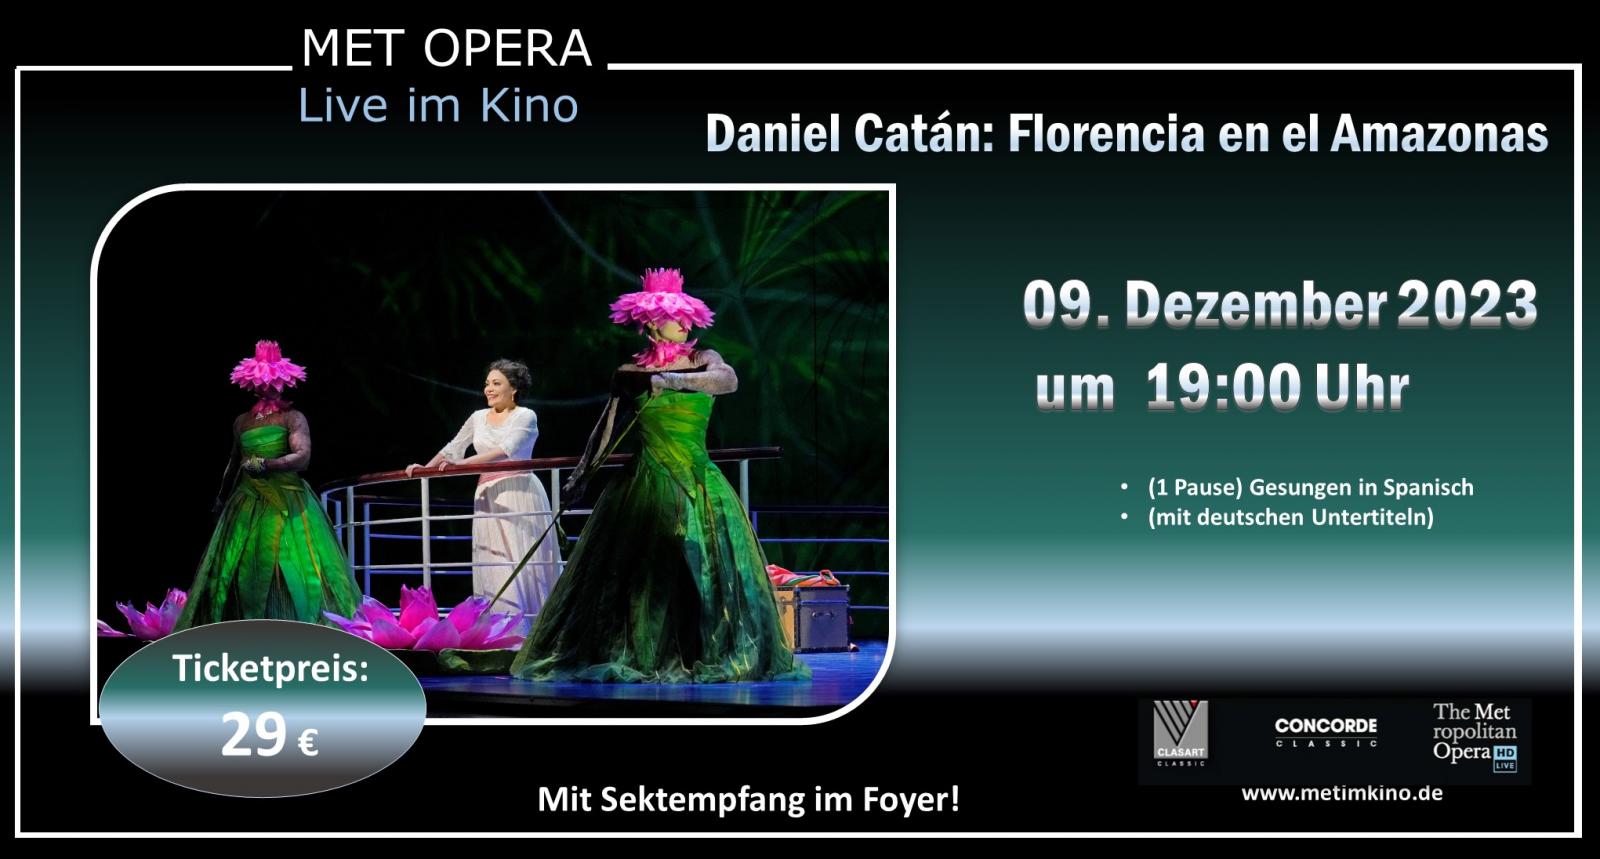 MET Opera live im Kino - neue Saison startet am 09.12.23 im Kino!